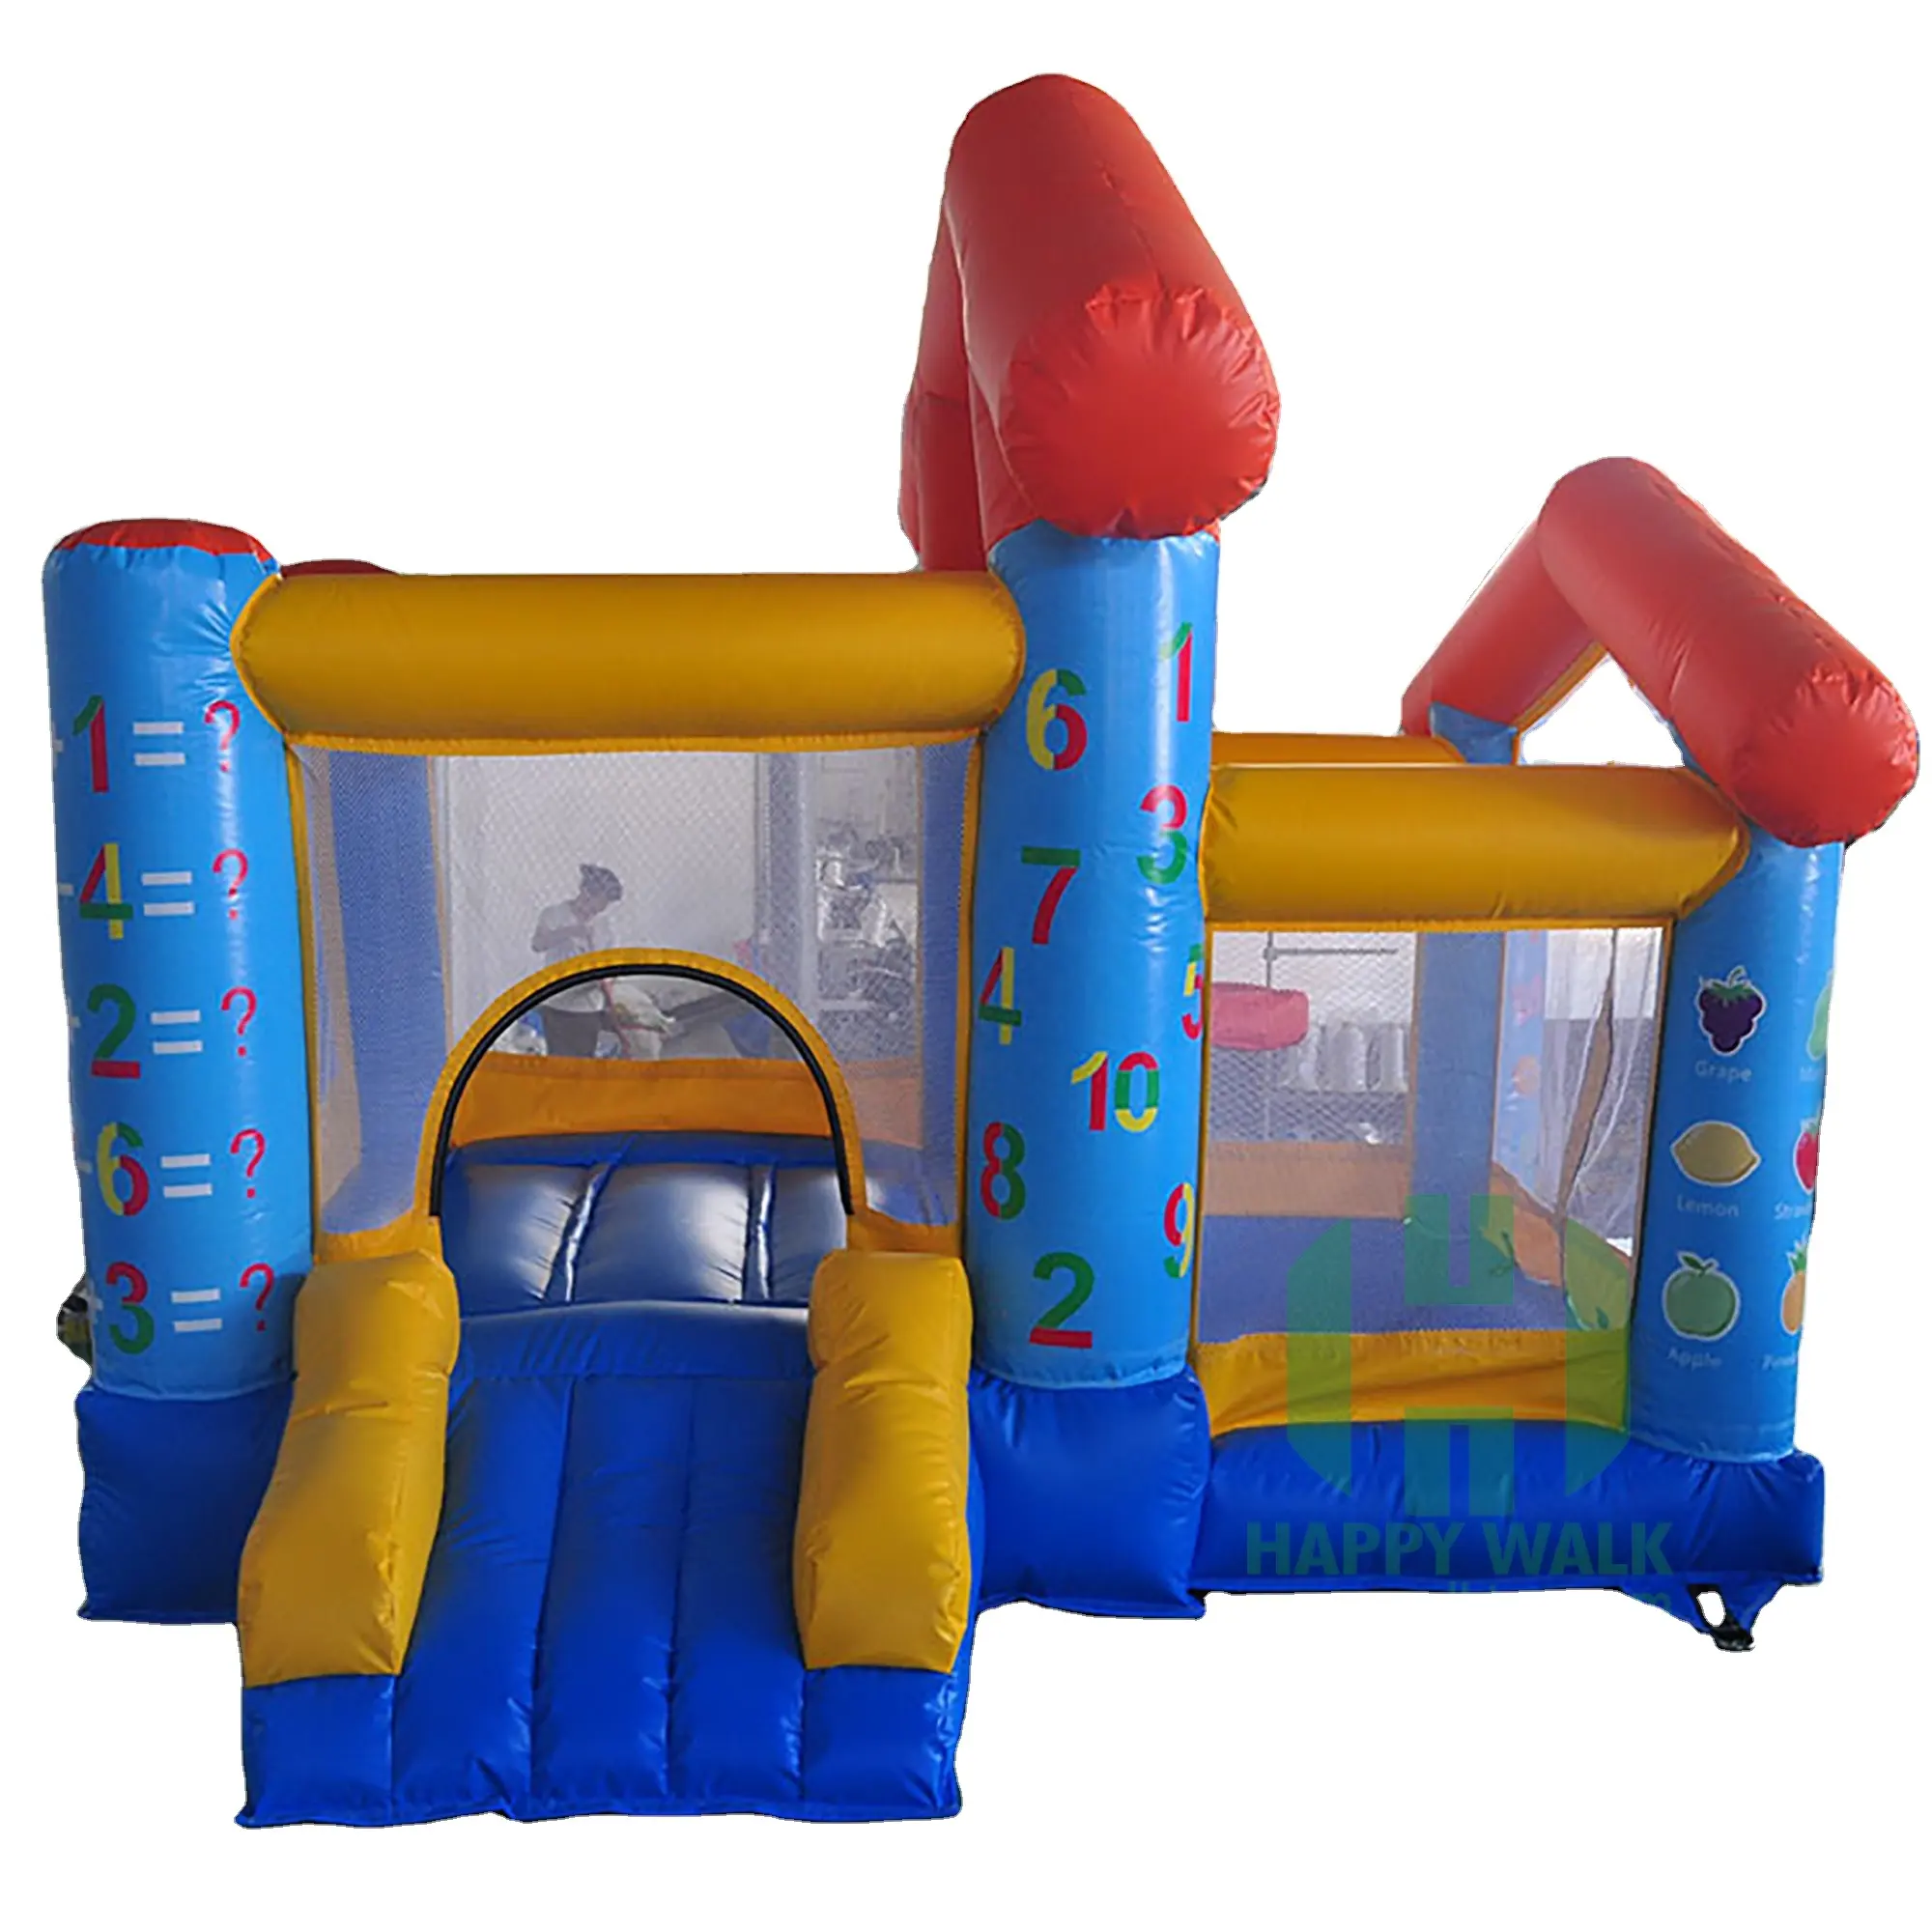 HI 2023 Komersial Taman Katak Dalam Ruangan Tiup Jumper Bouncy Jumping Bouncer untuk Anak-anak dan Orang Dewasa Dalam Penjualan Panas